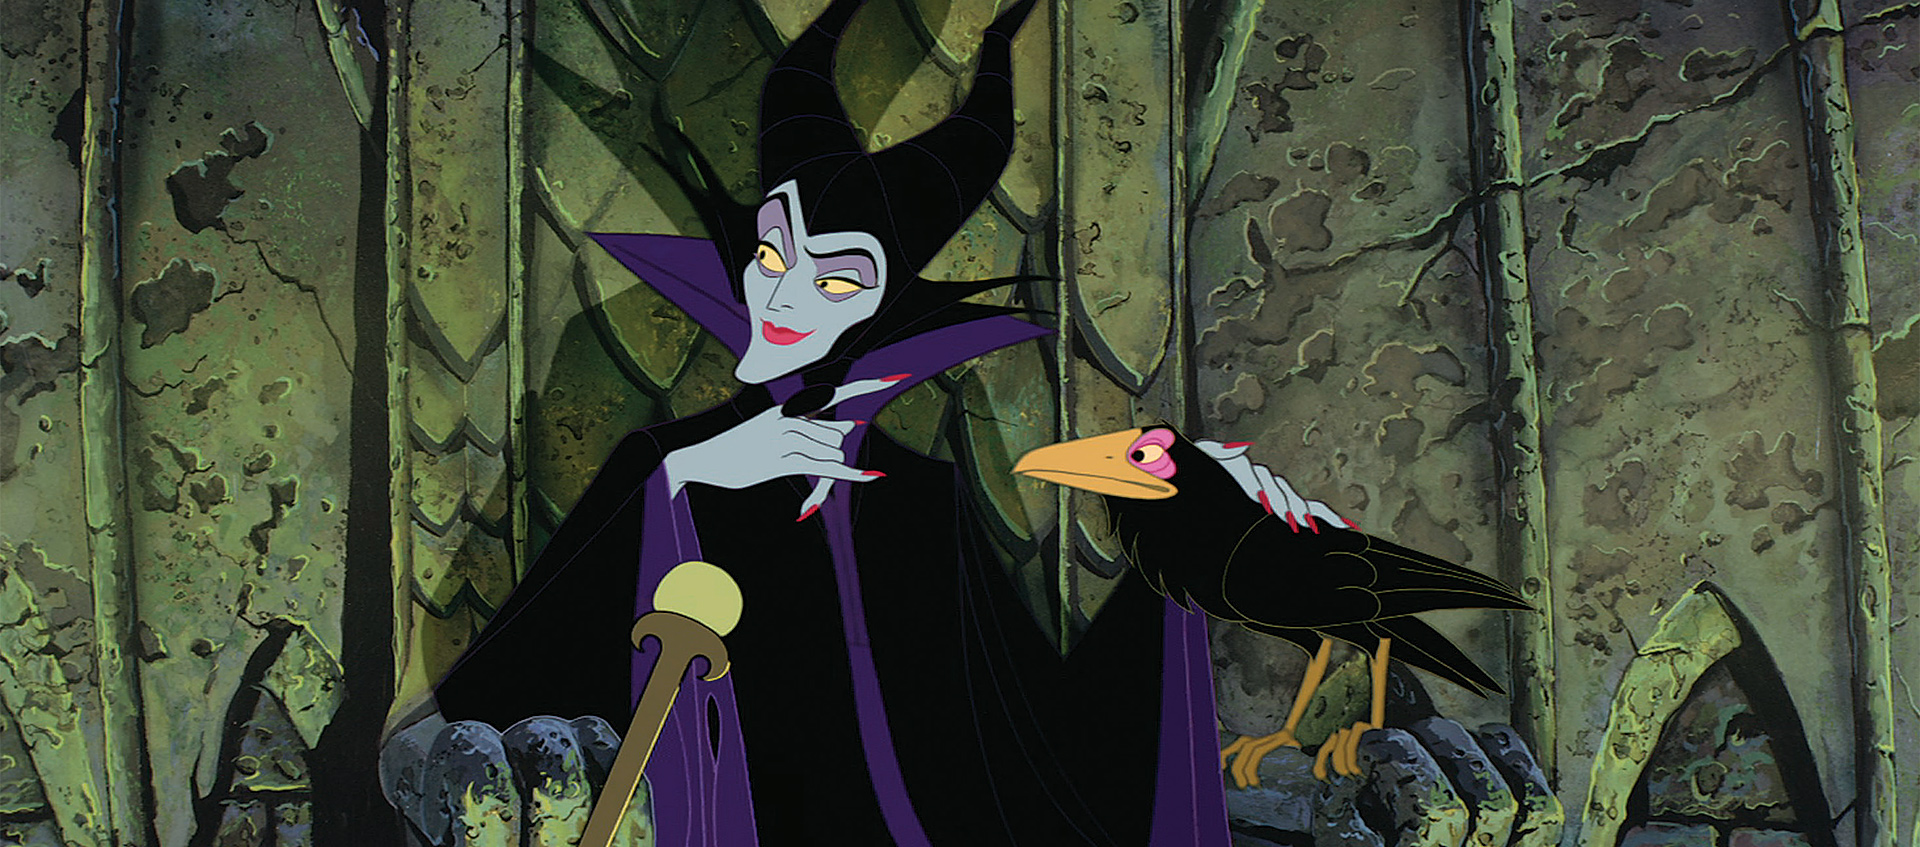 Maleficent; The Sleeping Beauty